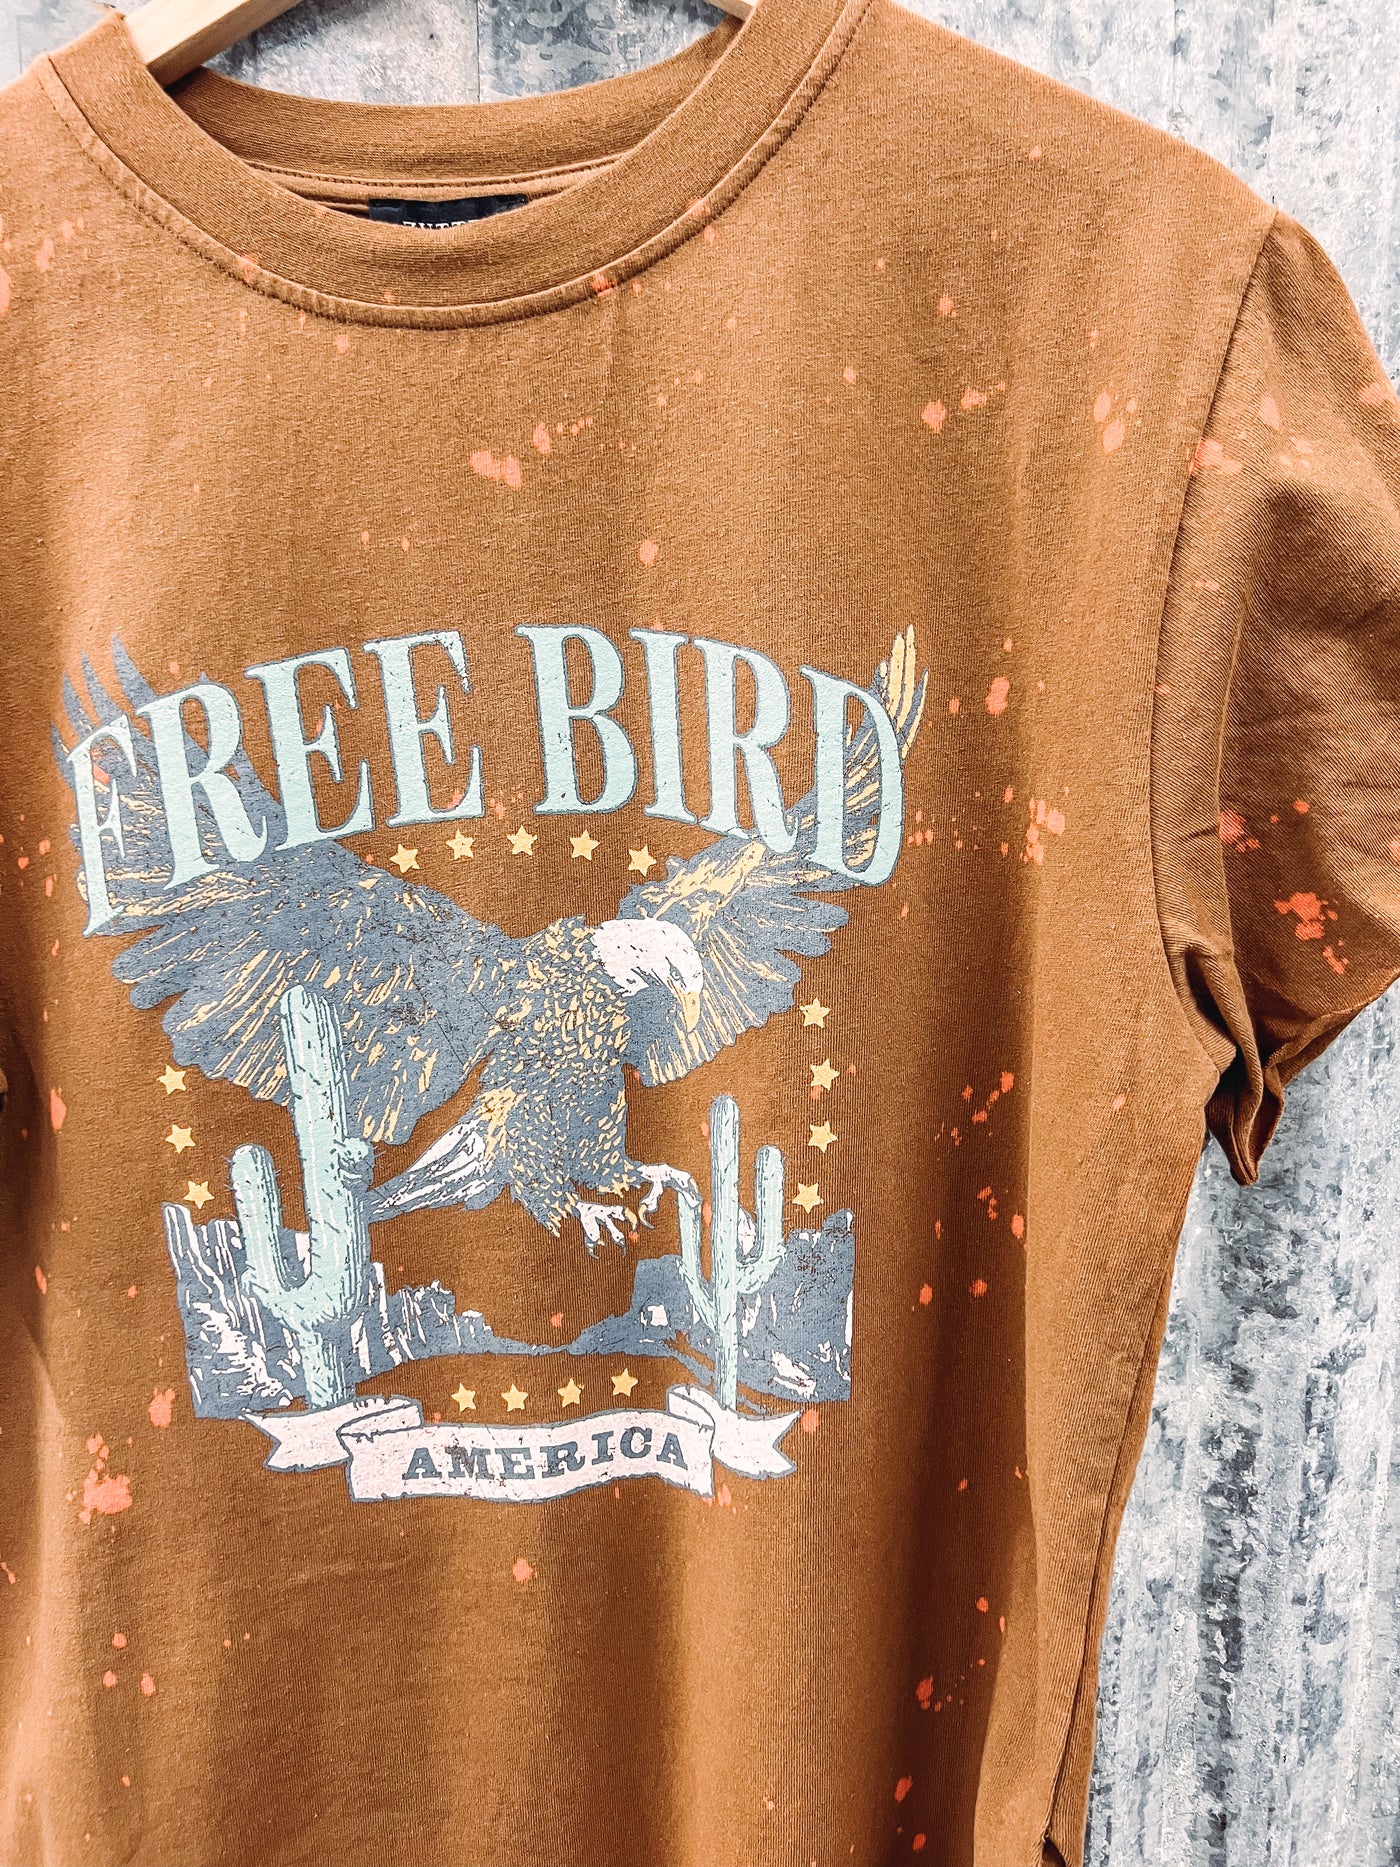 Free Bird America - Small left